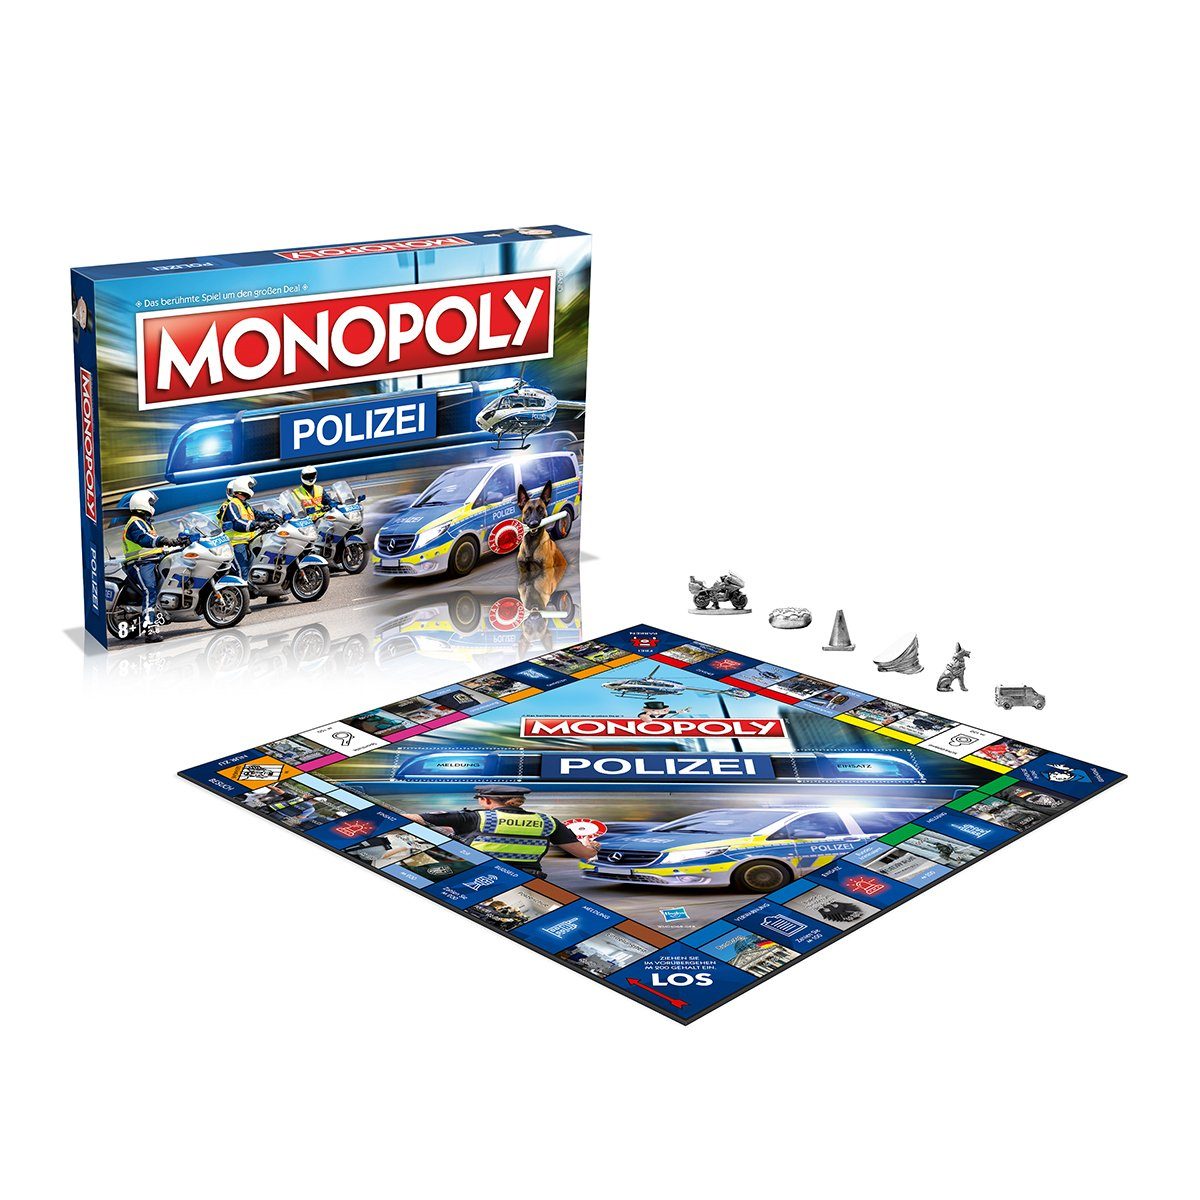 Winning - Polizei Spiel, Brettspiel Monopoly Moves